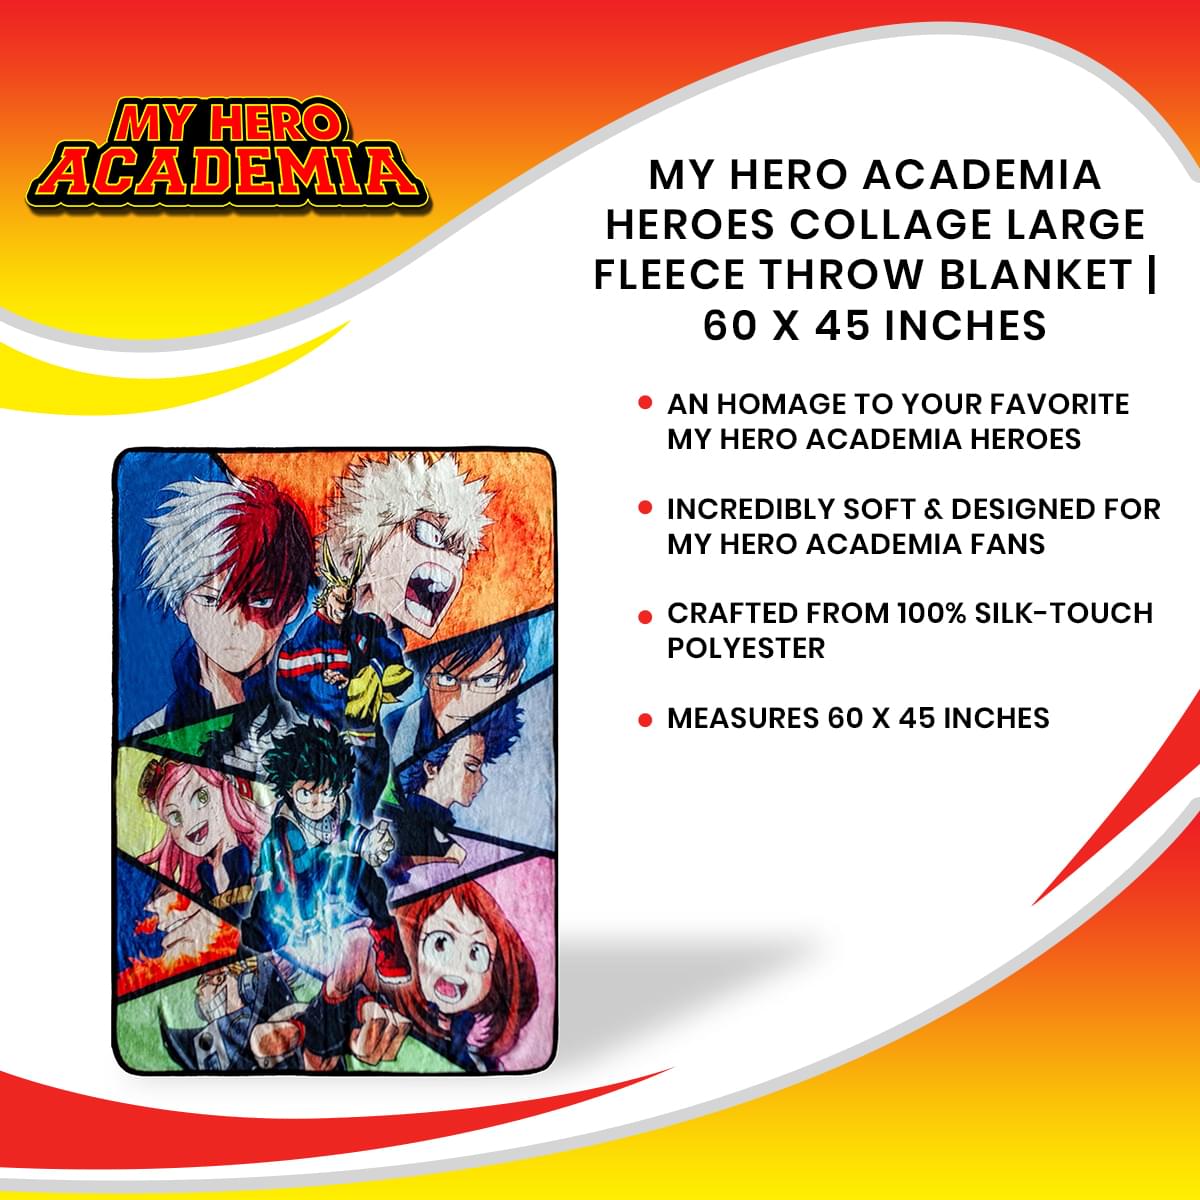 My Hero Academia Heroes Collage Large Fleece Throw Blanket | 60 x 45 Inches